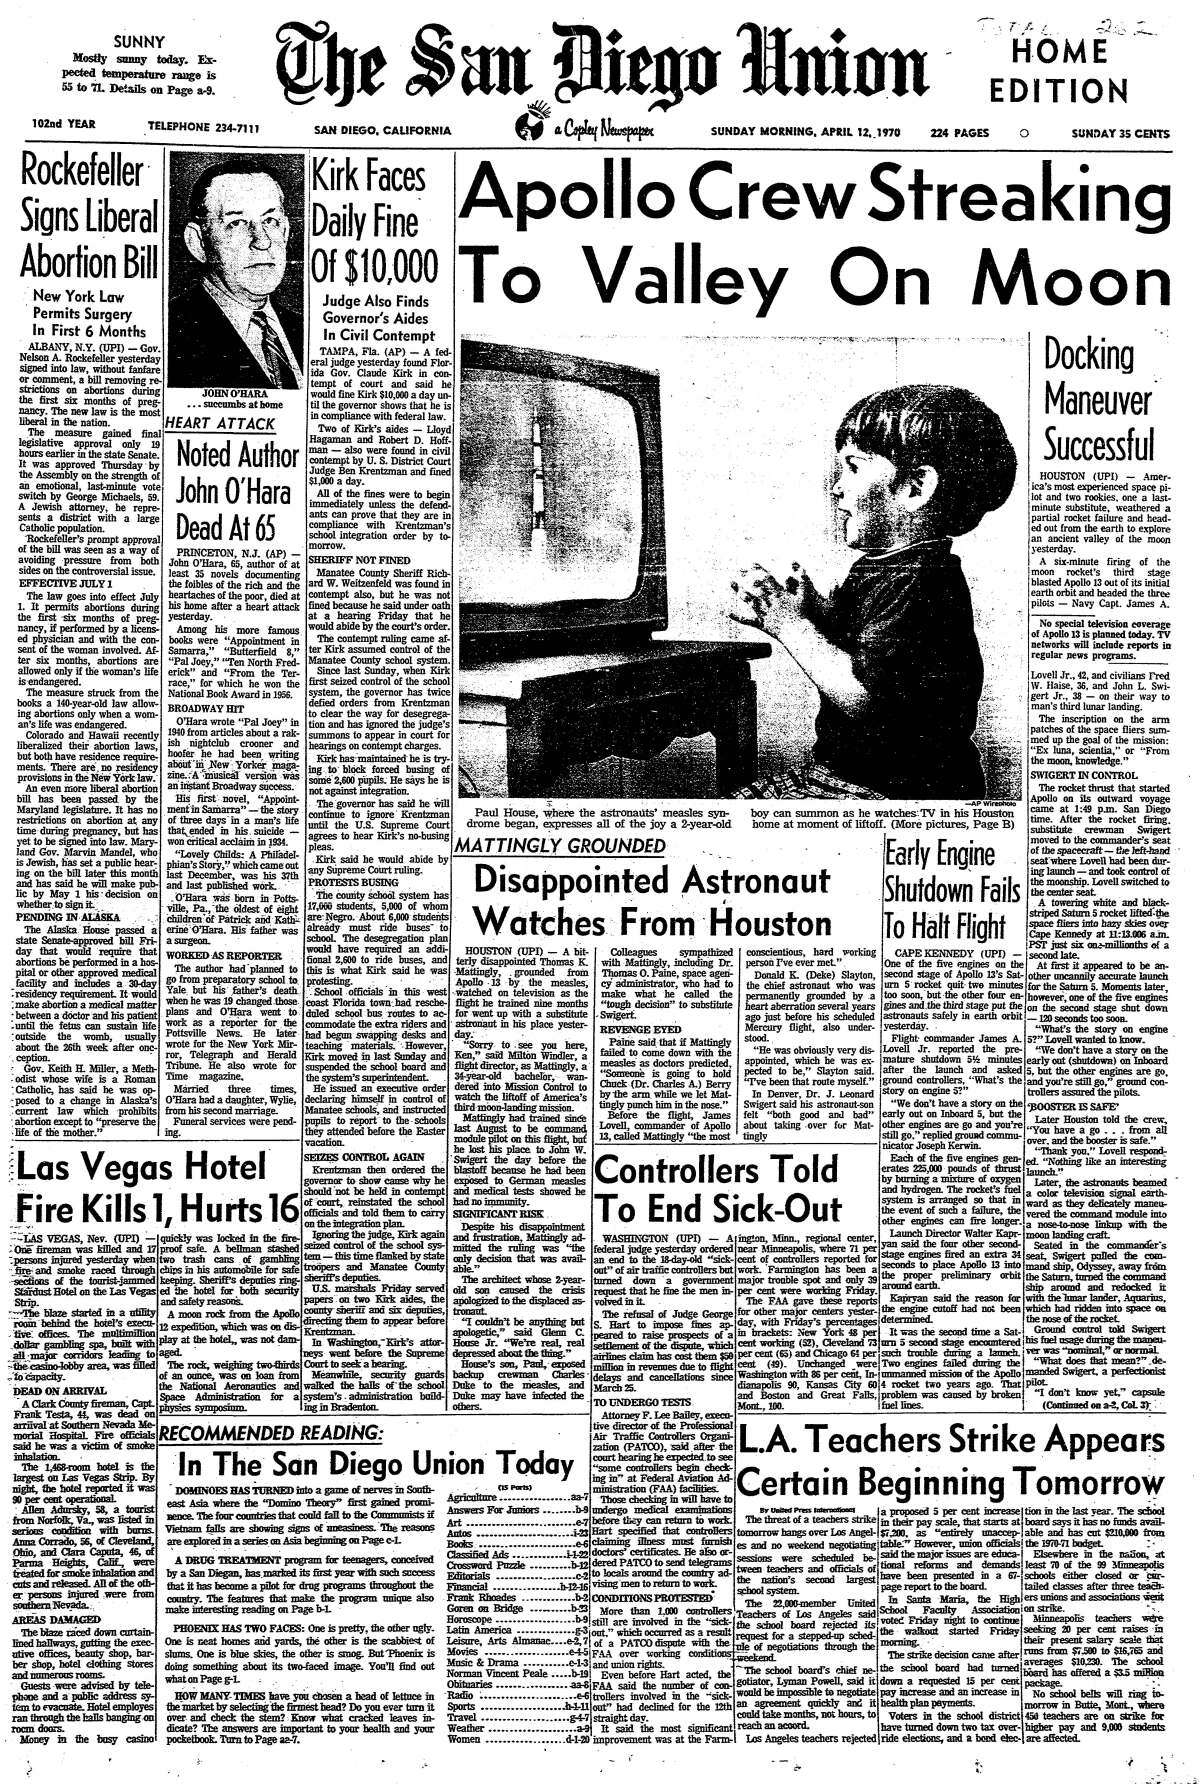 April 12, 1970 front page